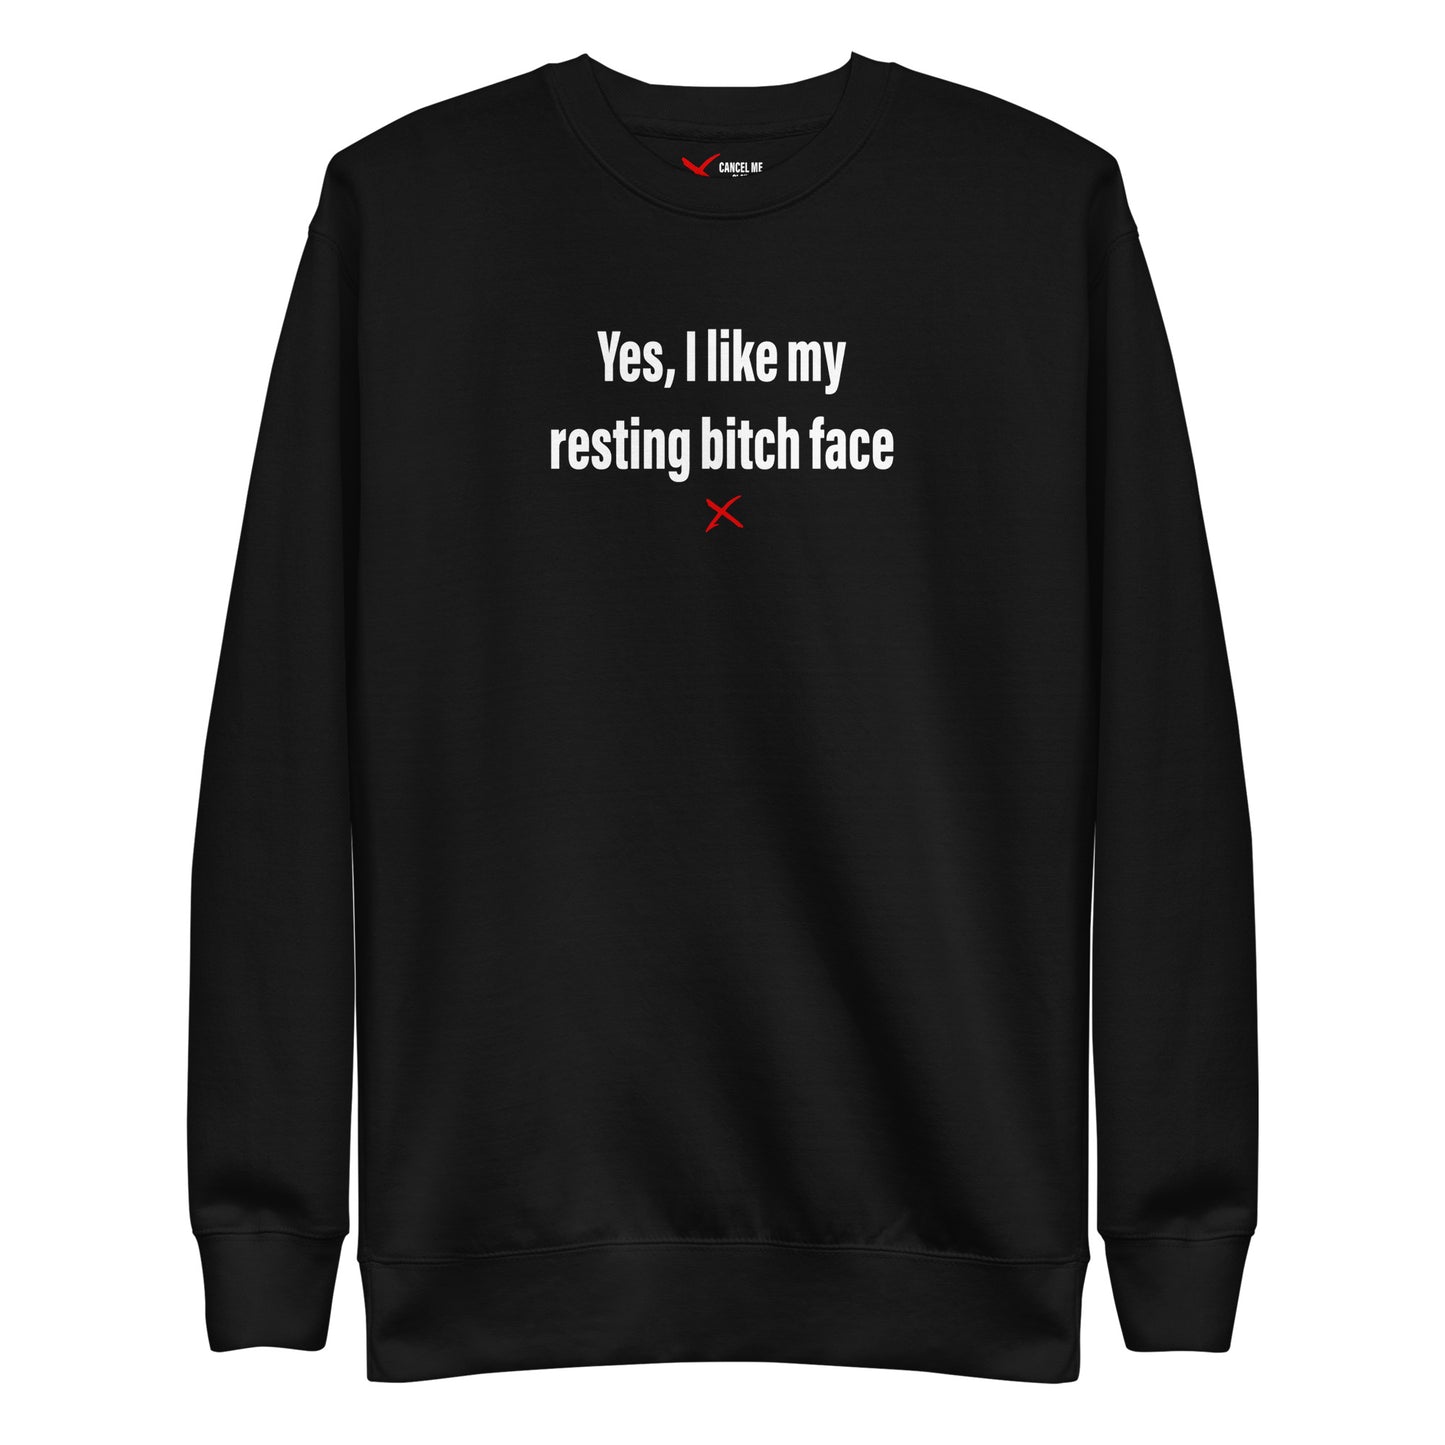 Yes, I like my resting bitch face - Sweatshirt